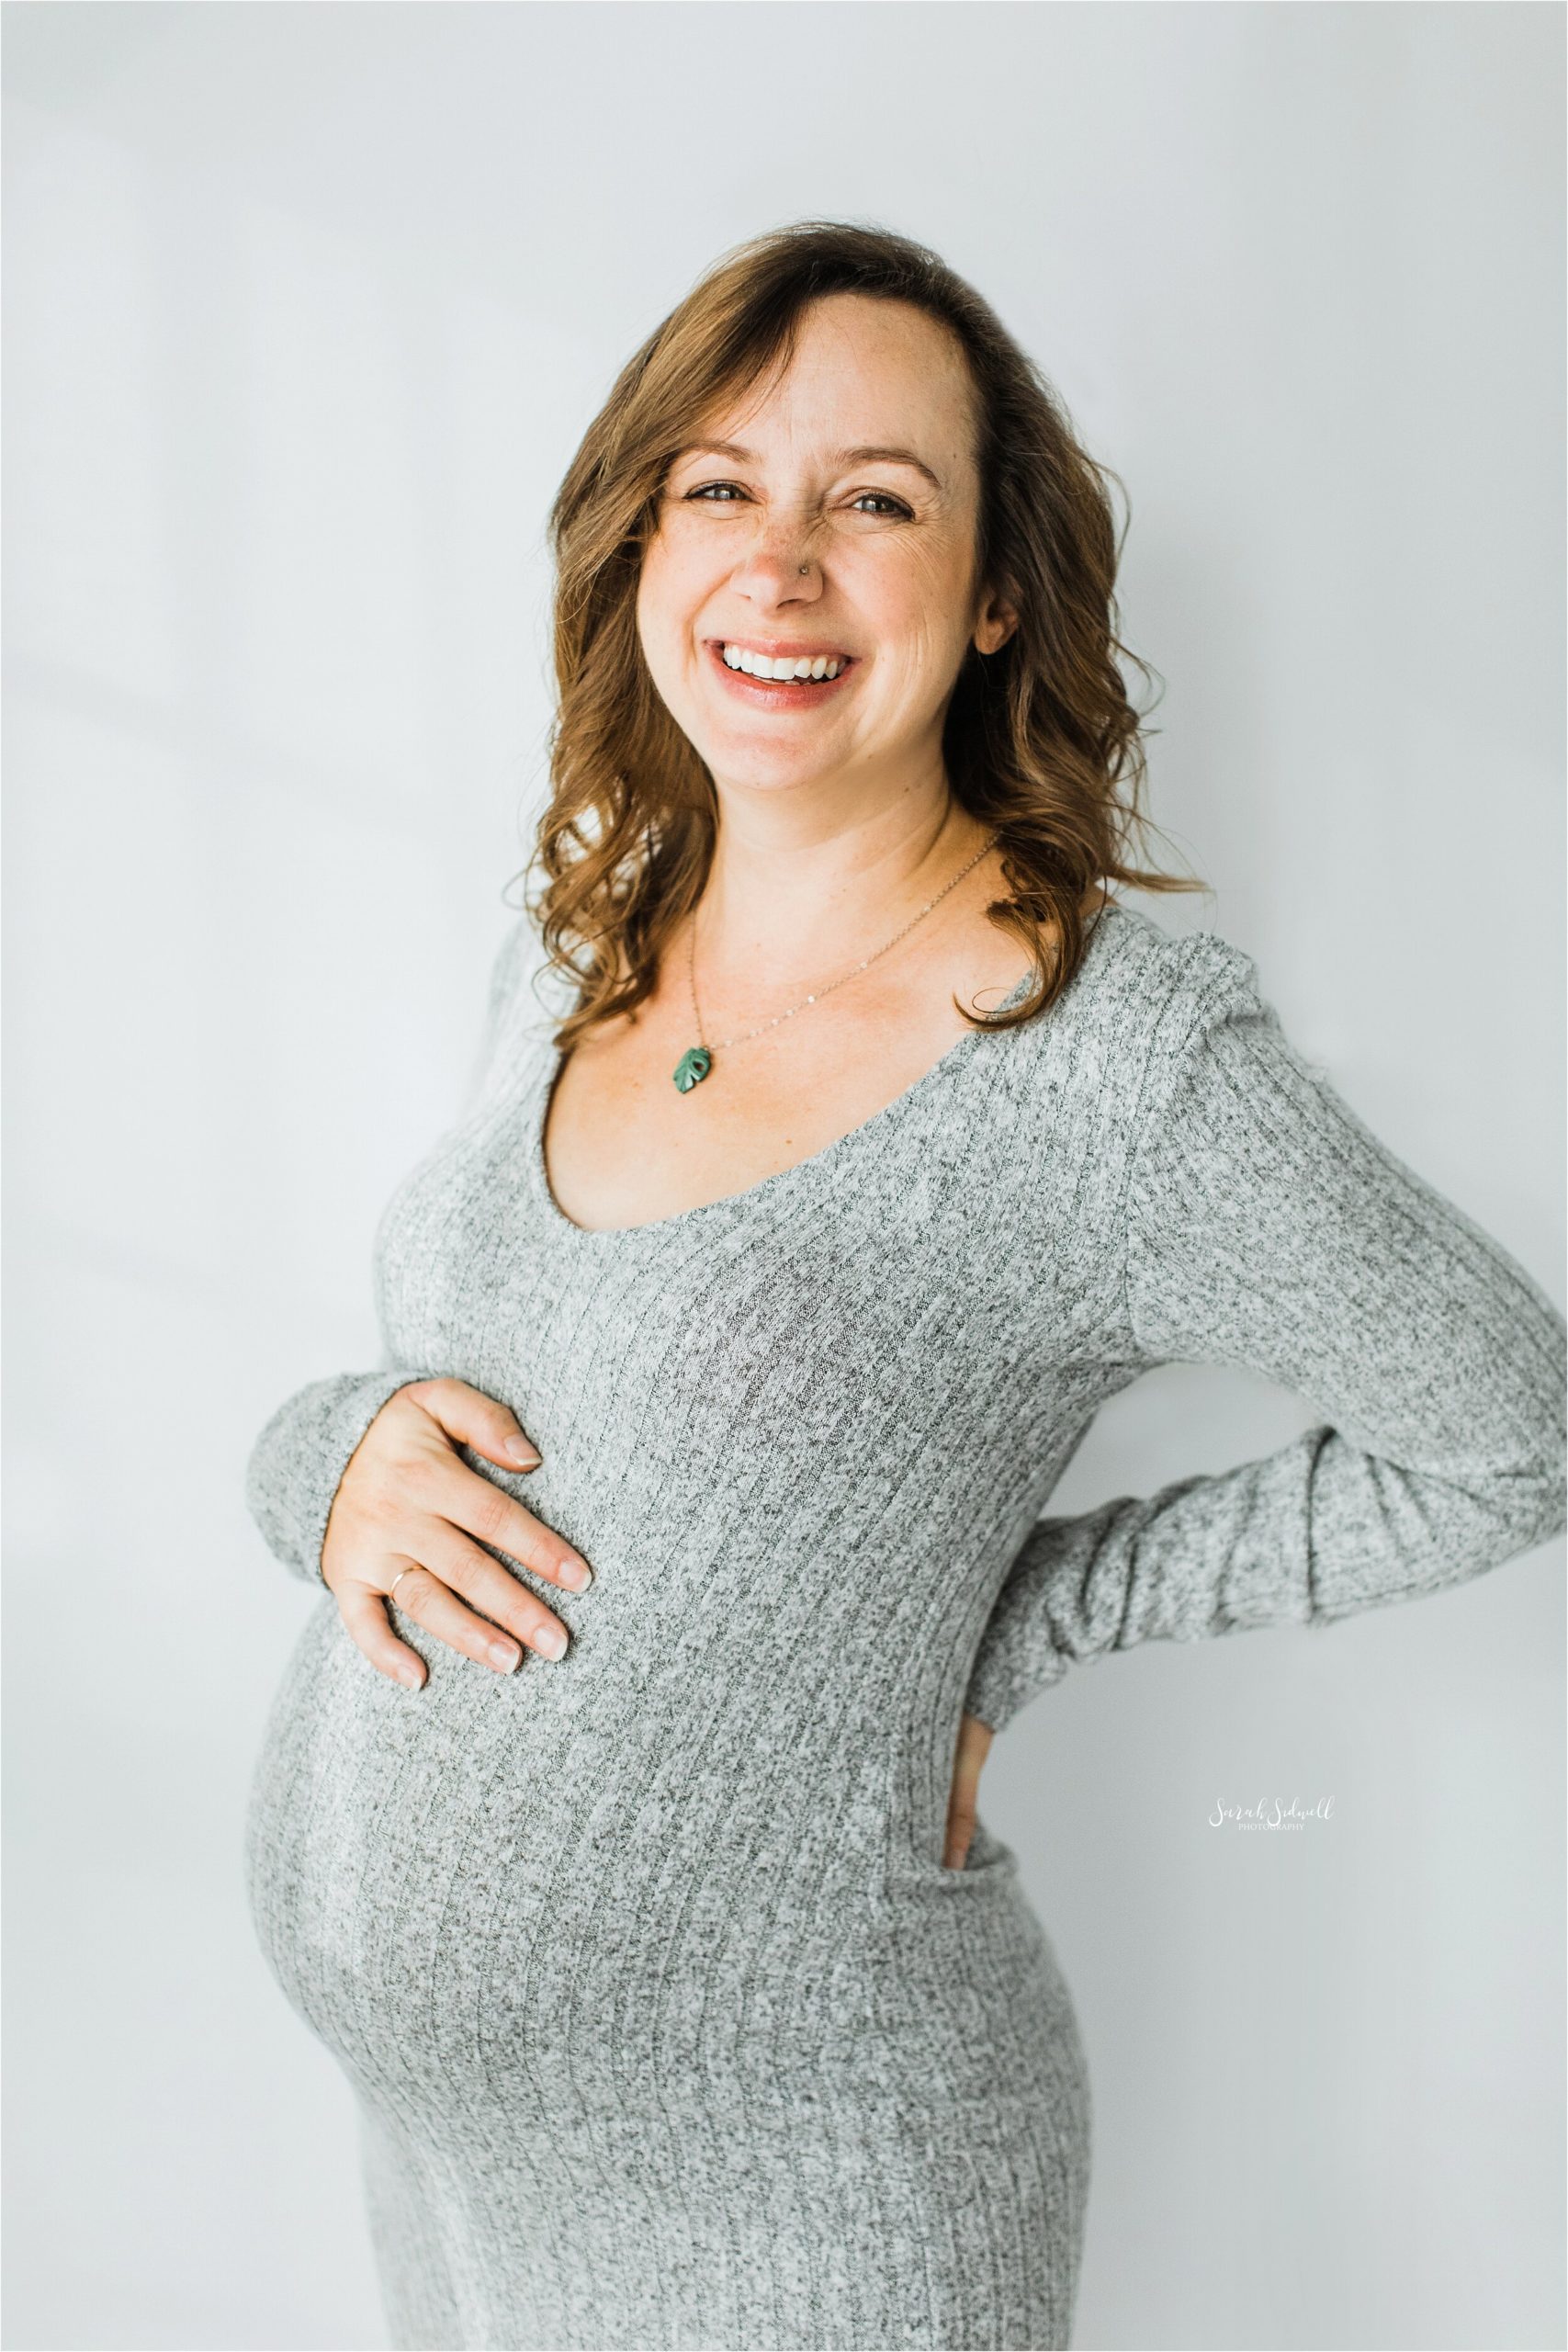 Modern Minimal Maternity Photography